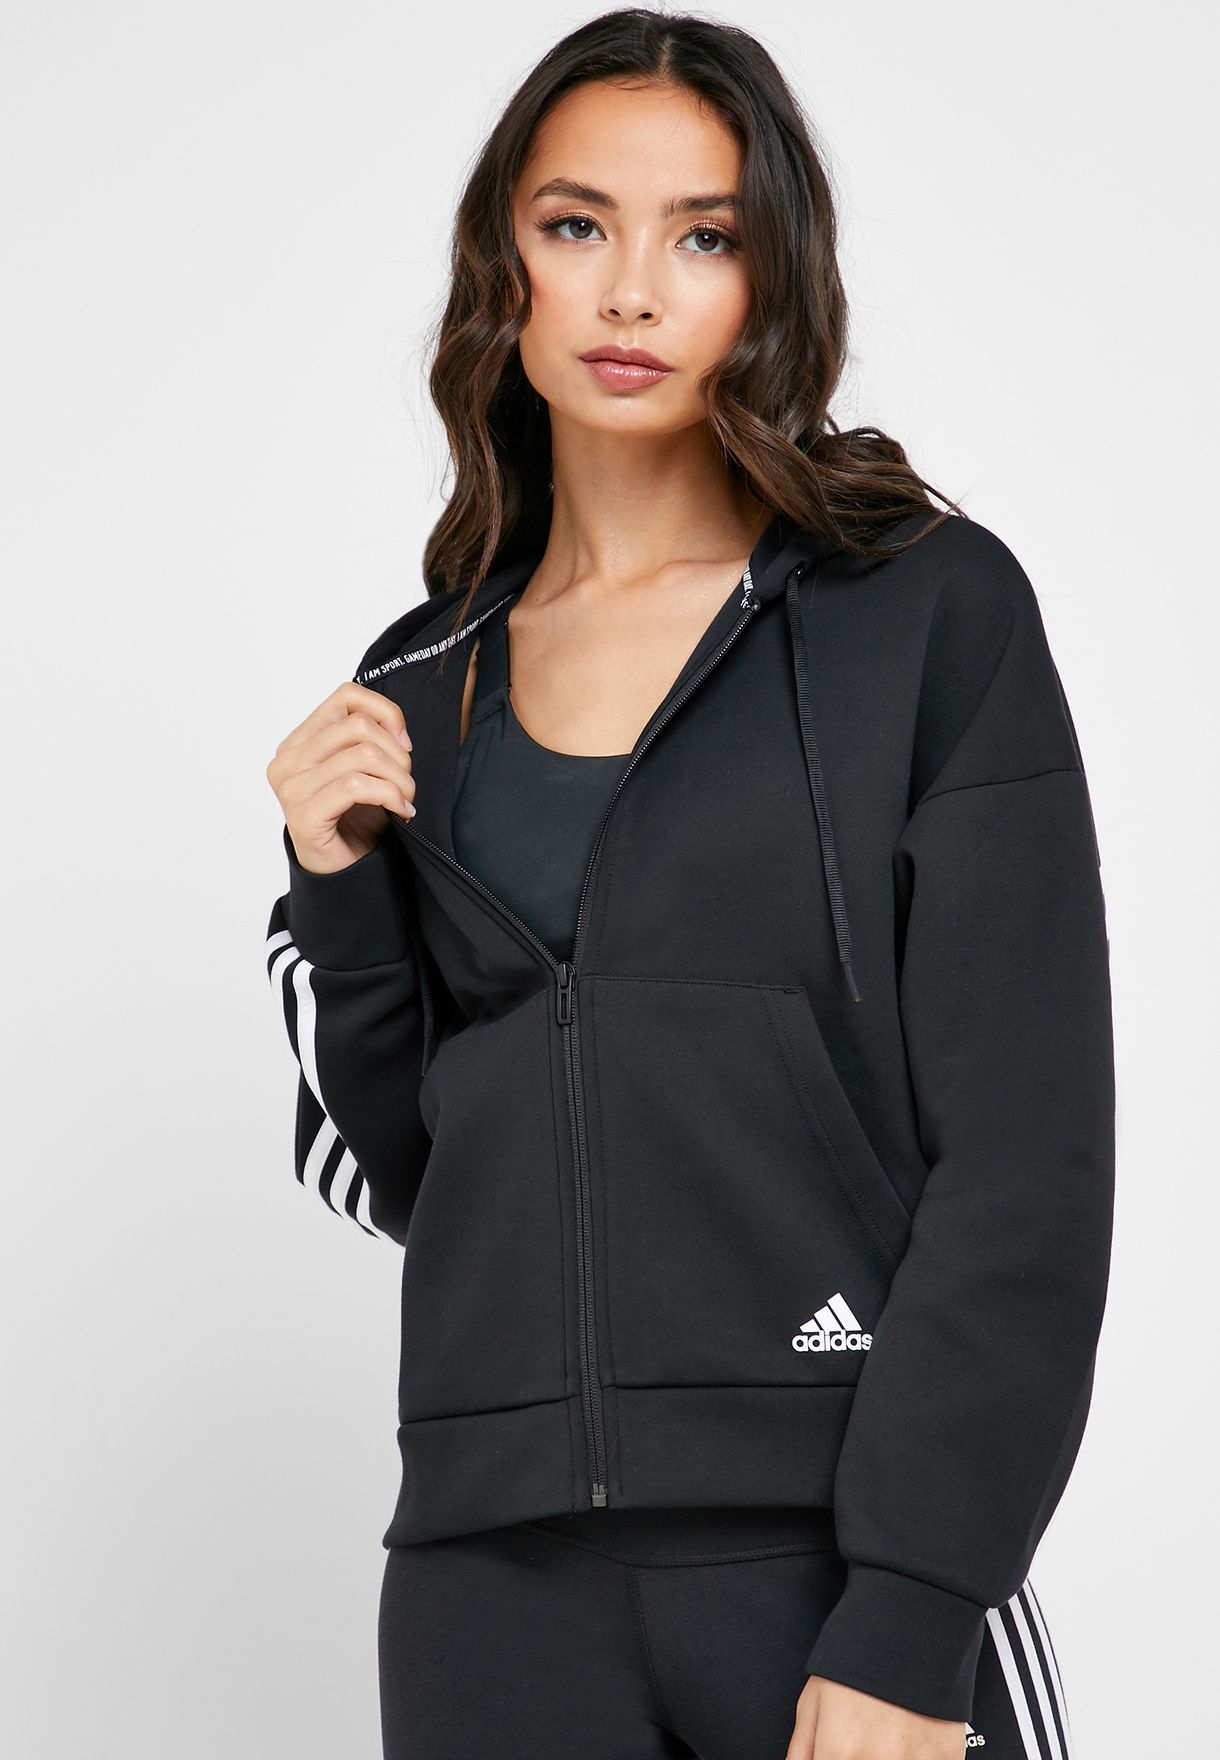 adidas women's 3 stripes hoodie